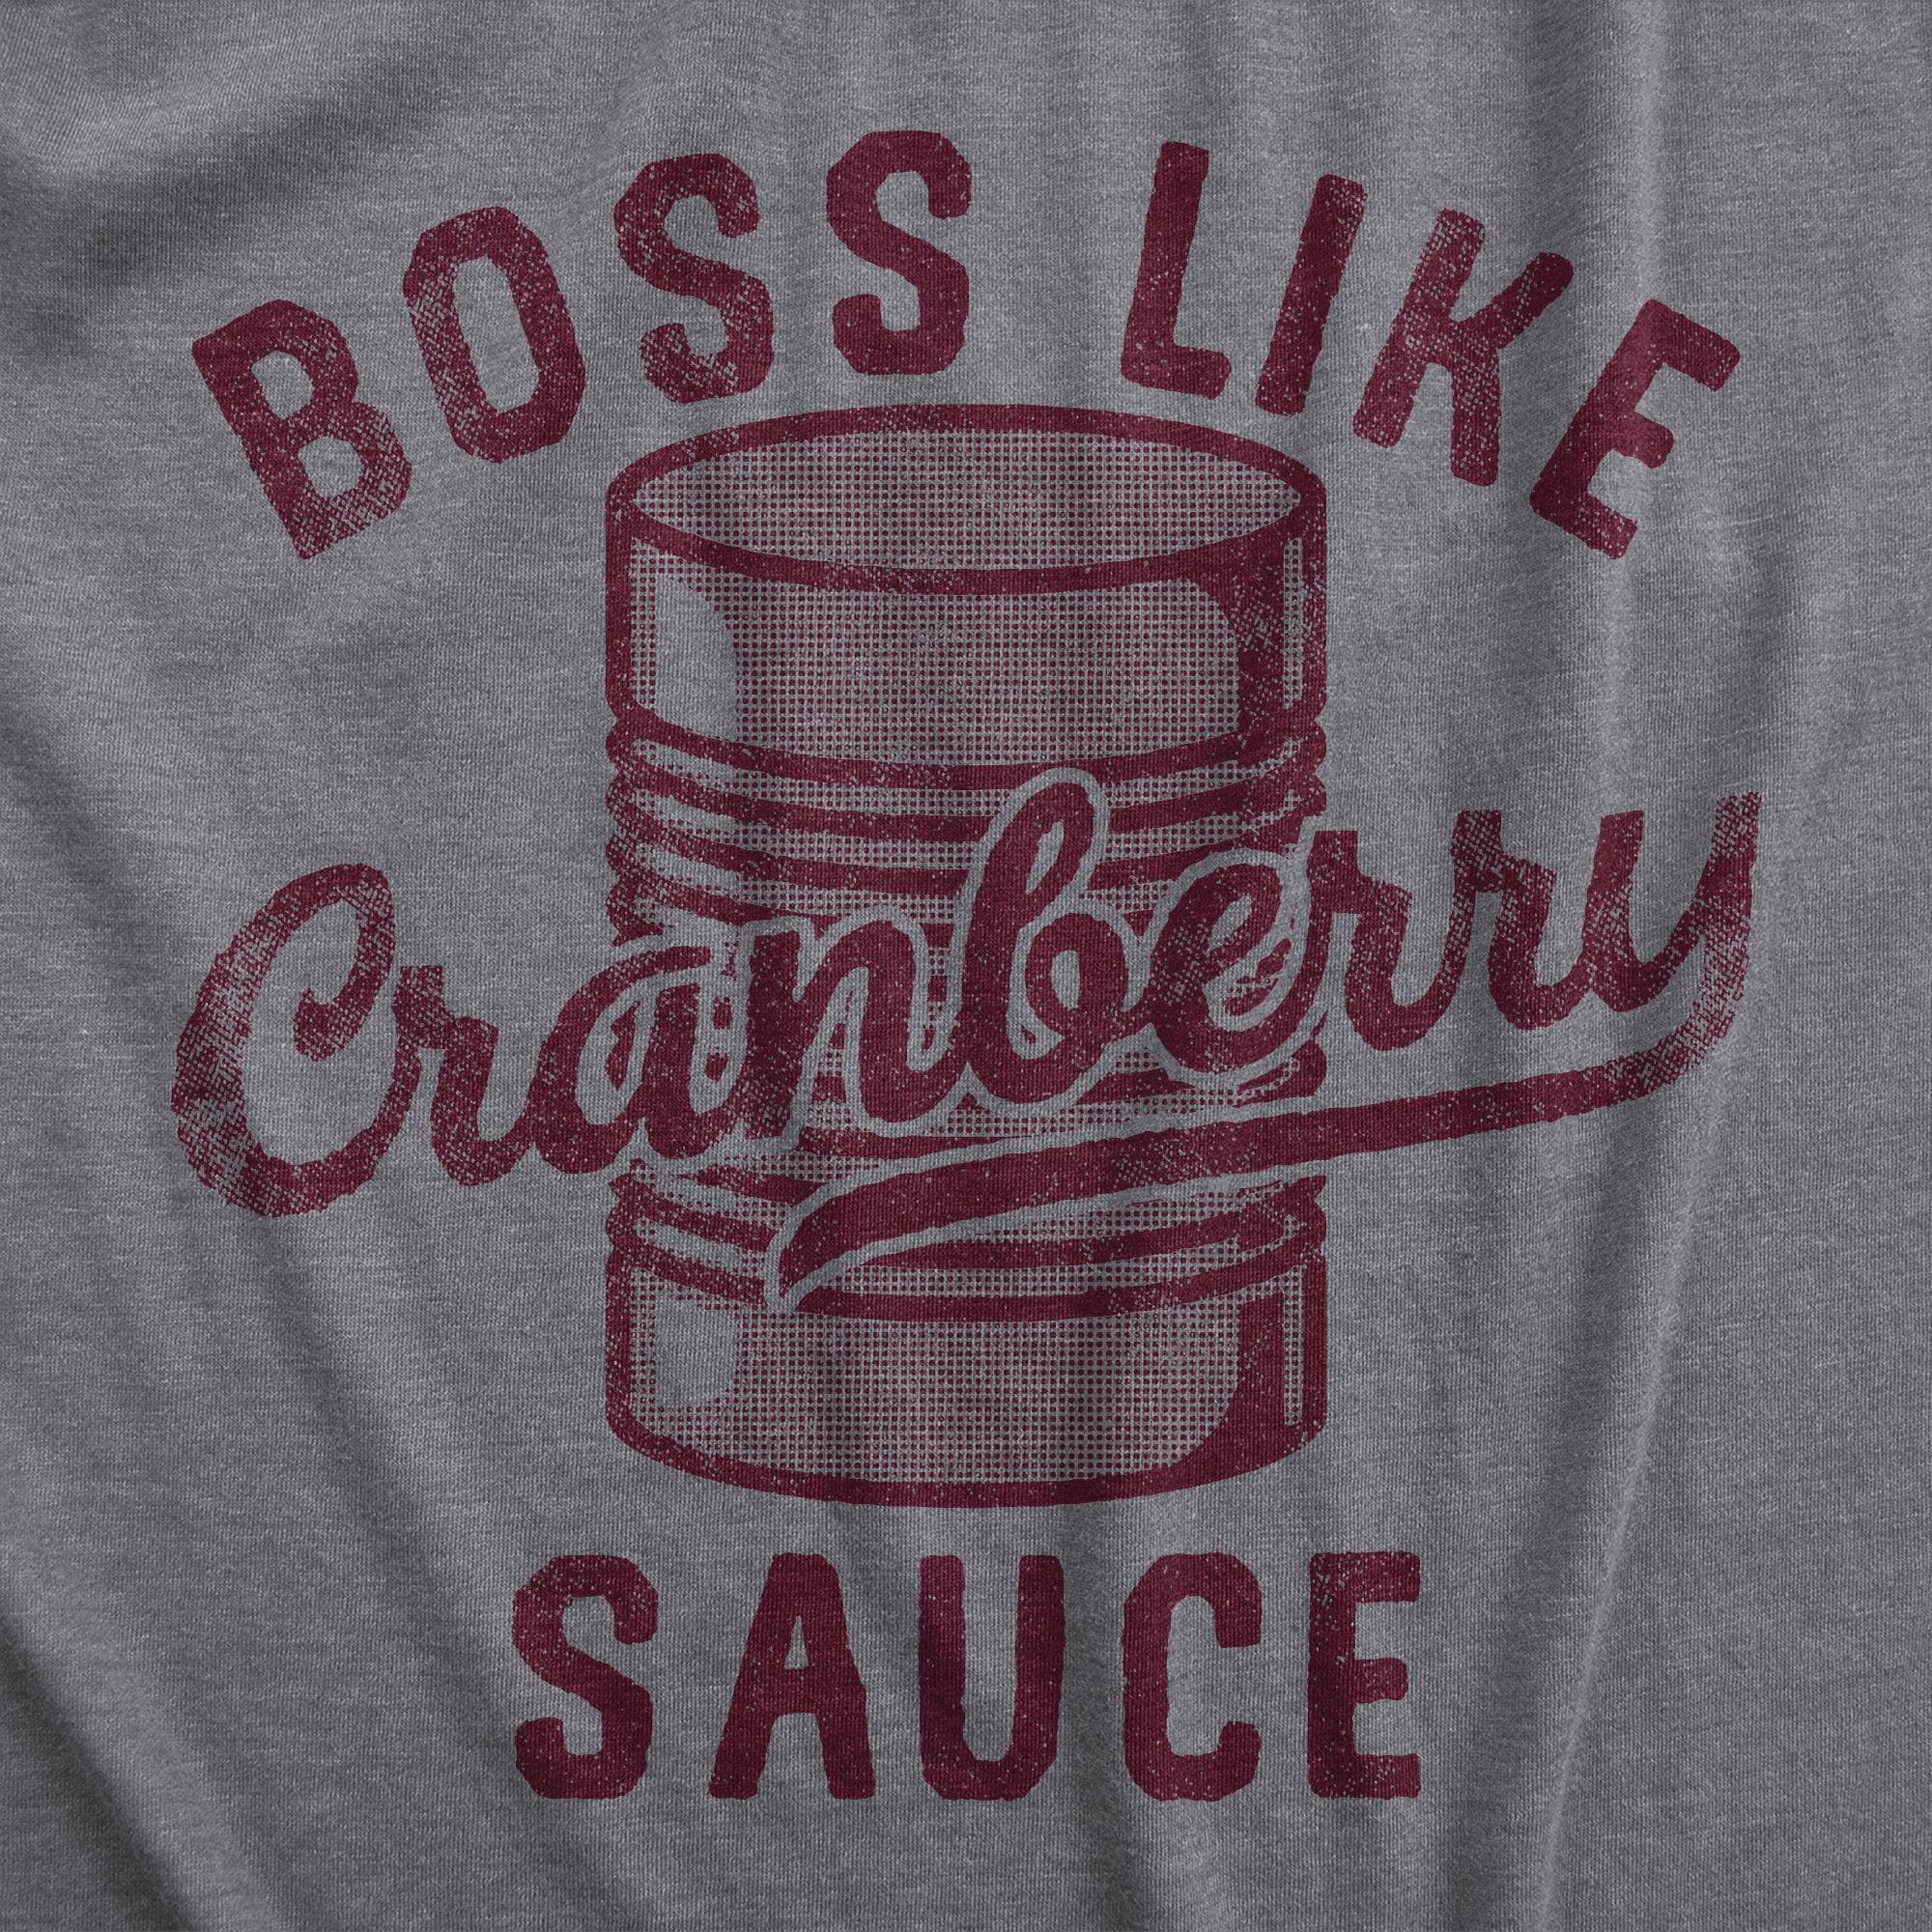 Boss Like Cranberry Sauce Men's Tshirt  -  Crazy Dog T-Shirts